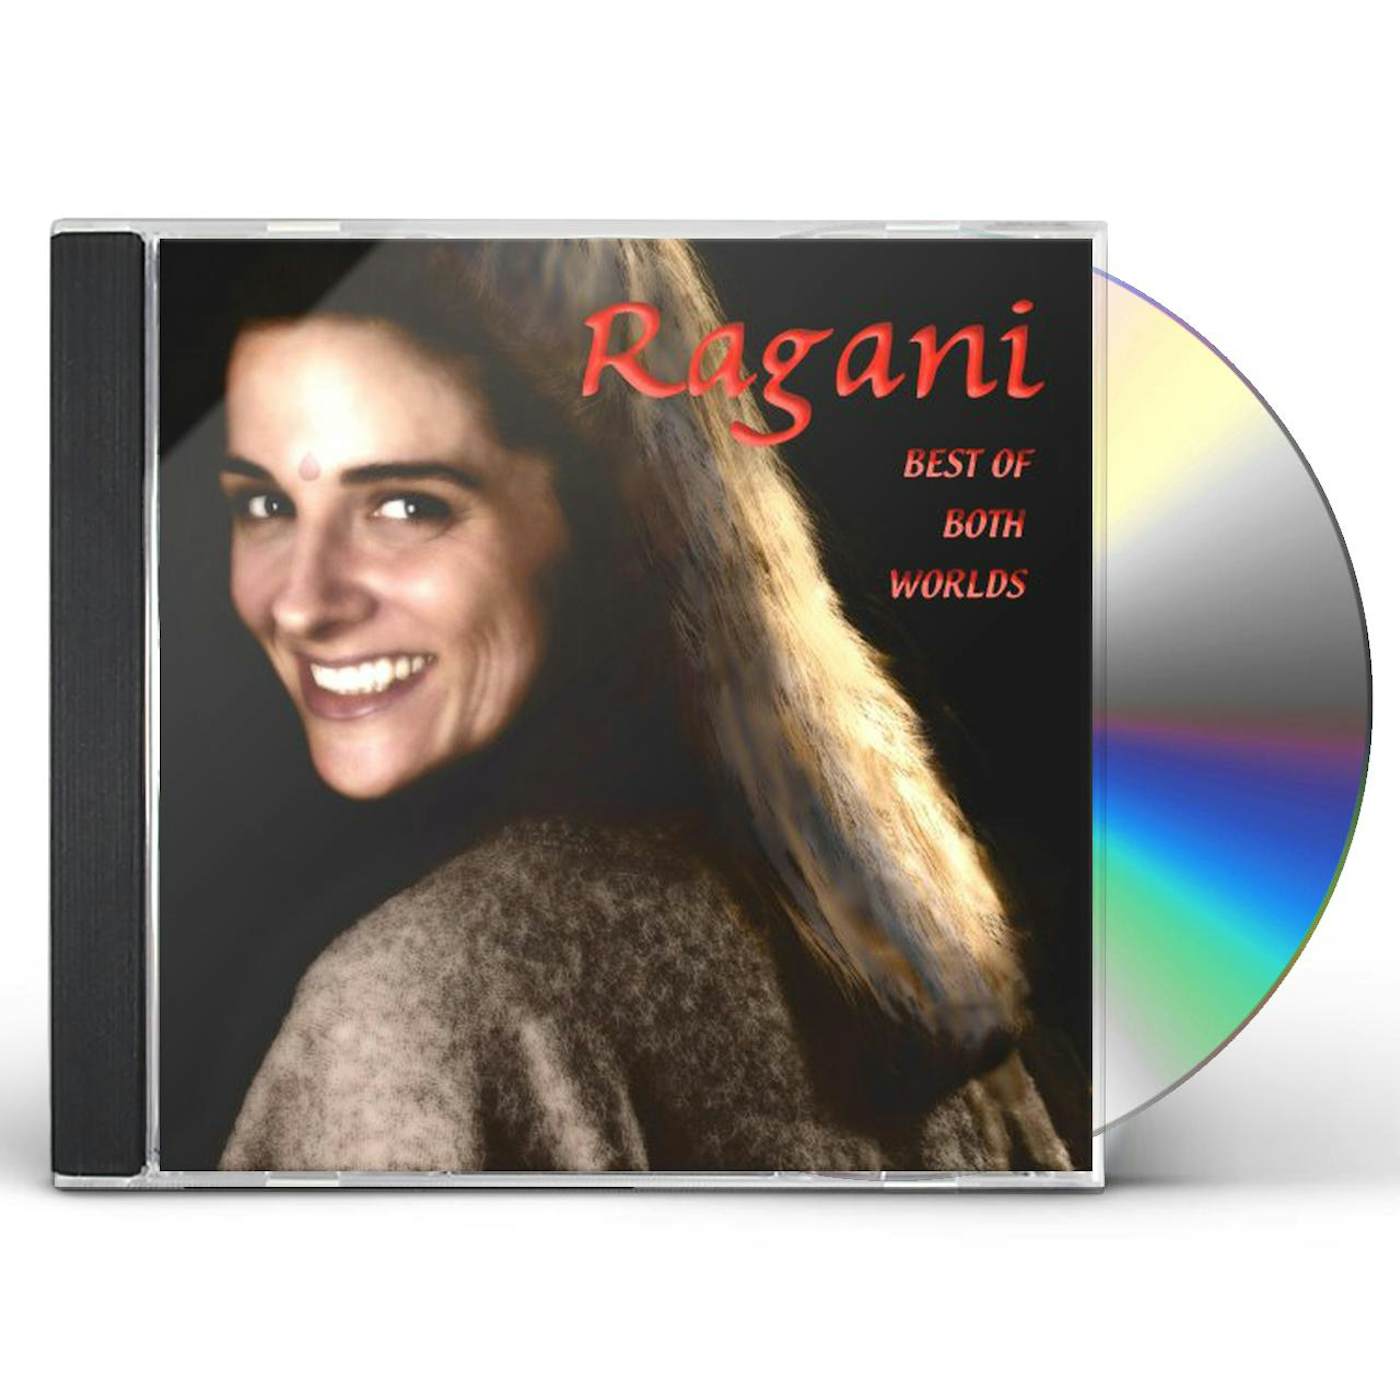 Ragani BEST OF BOTH WORLDS (KIRTAN CAFE VOL. 1) CD